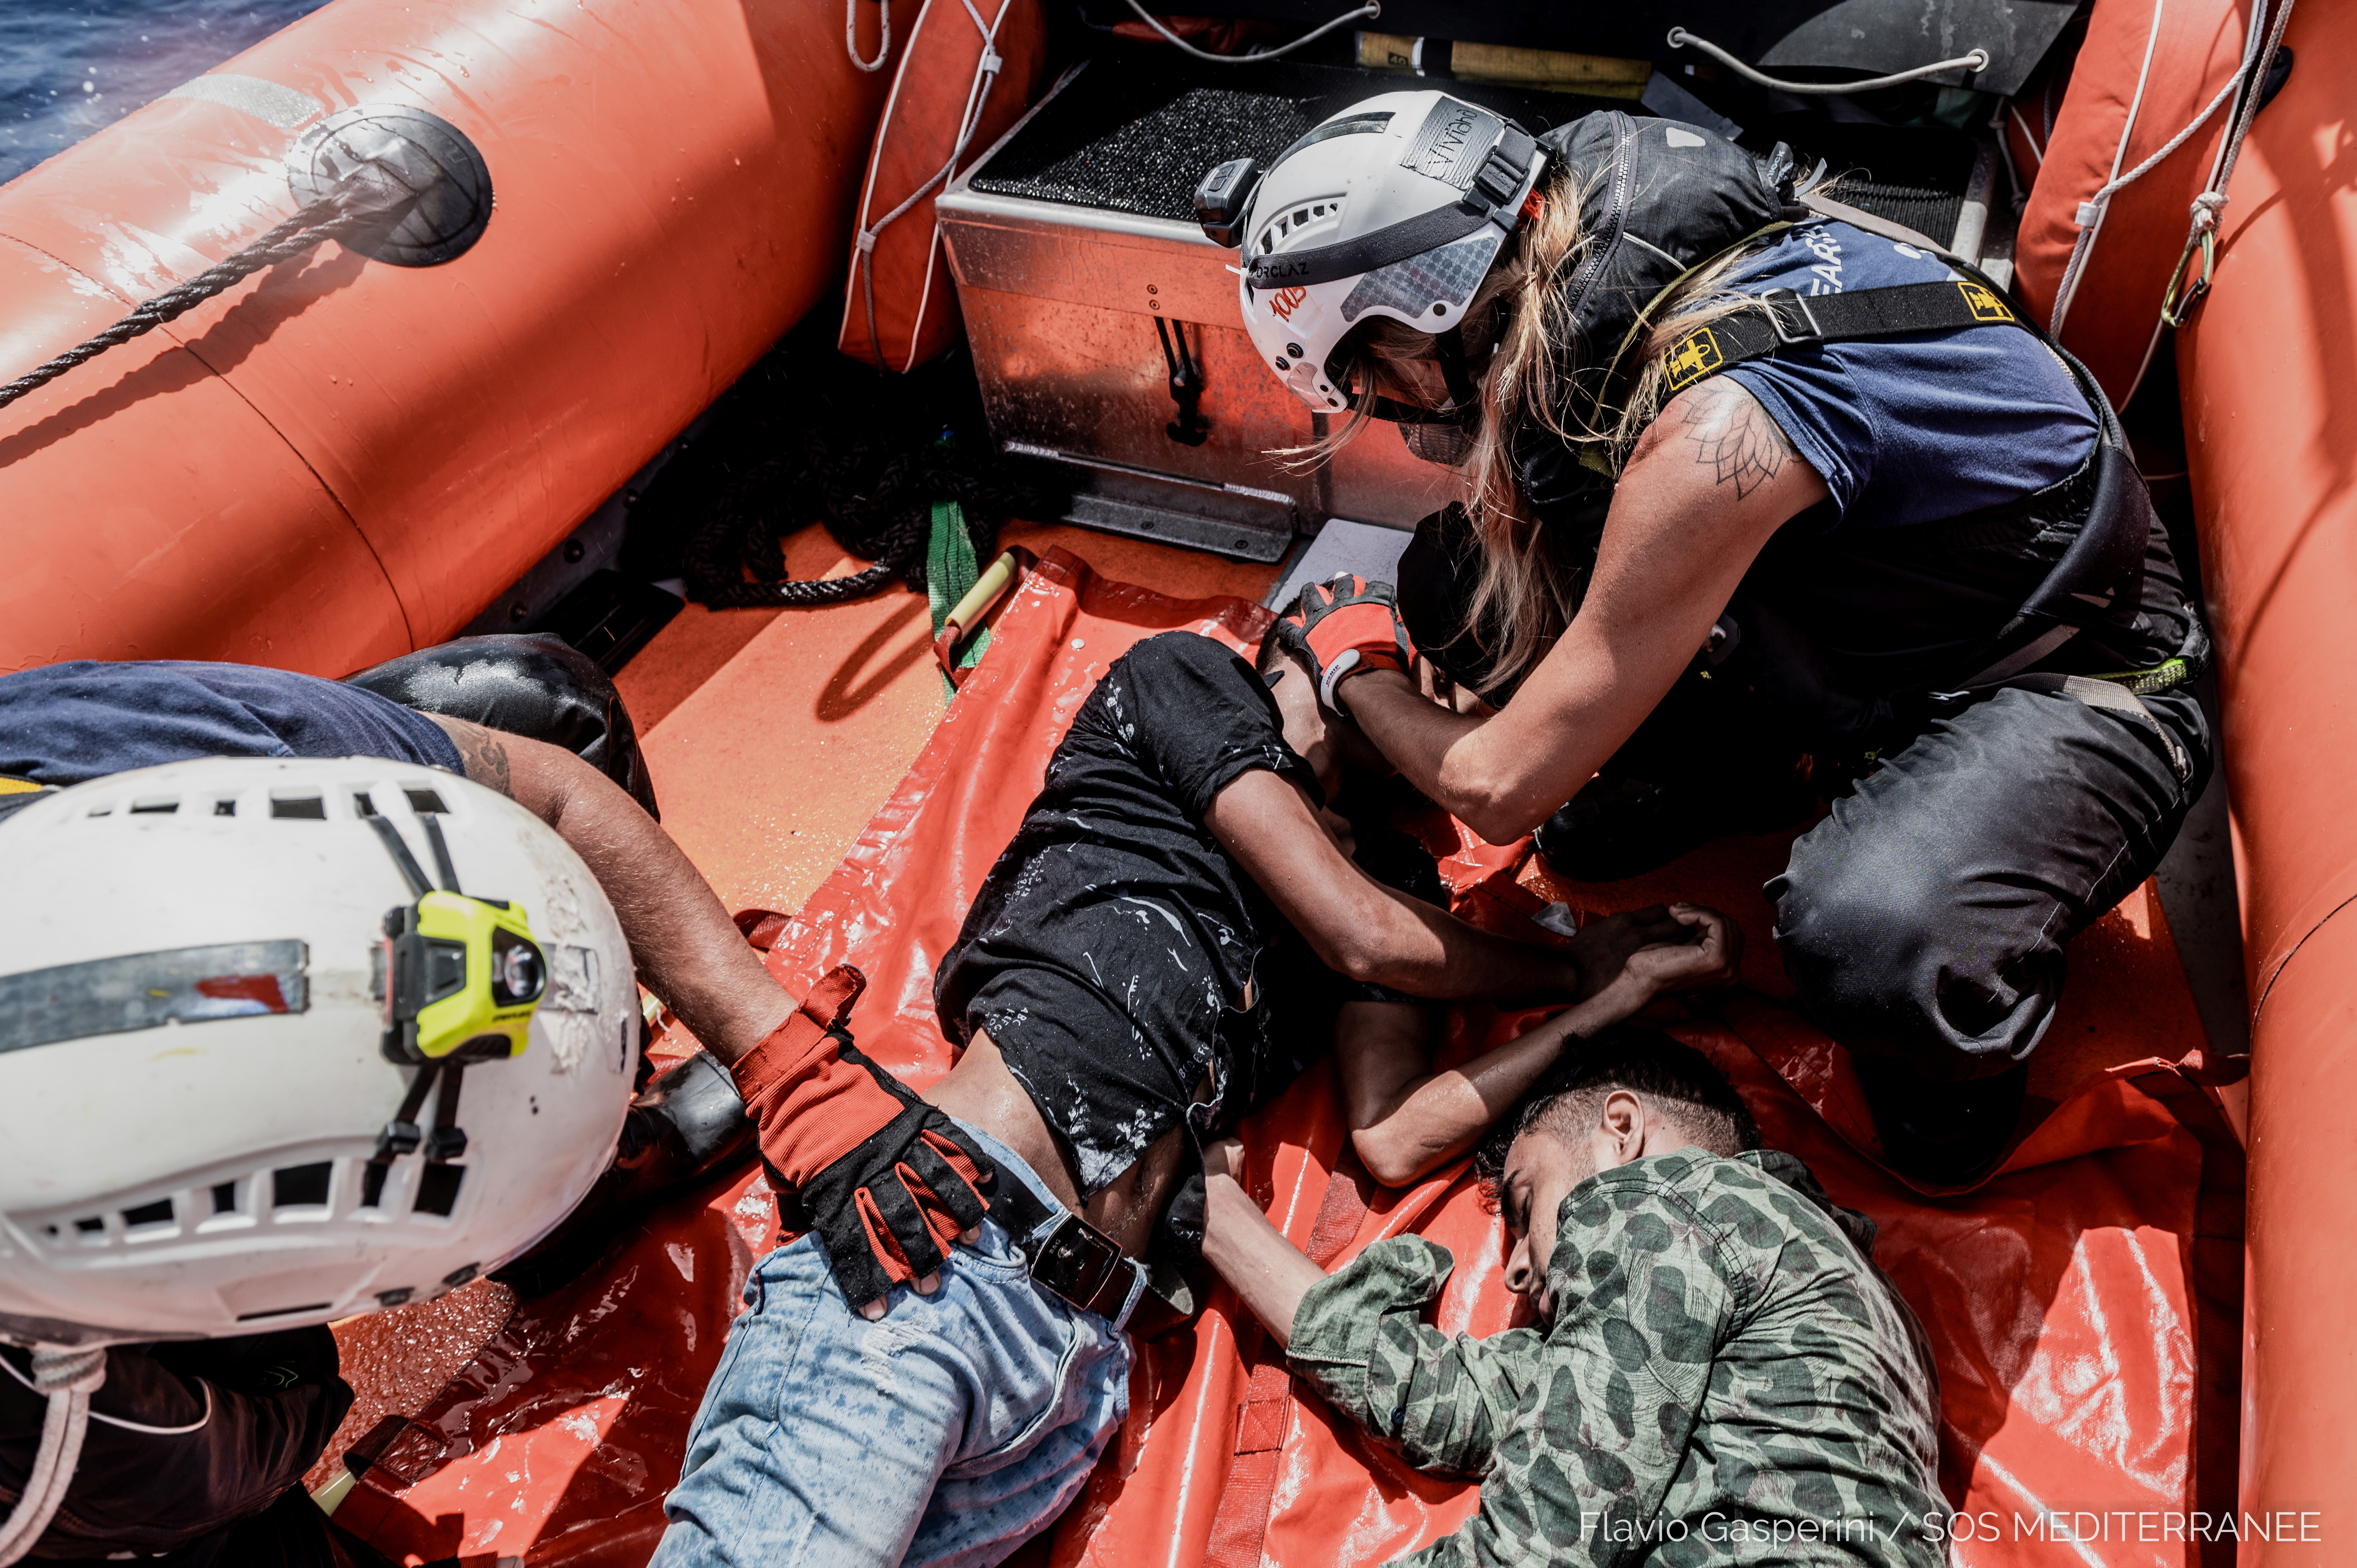 Search and rescue (SAR) team members of the Ocean Viking aid migrants during an SAR operation in the Mediterranean Sea, July 4, 2021. Flavio Gasperini/SOS Mediterranee/Handout via REUTERS 